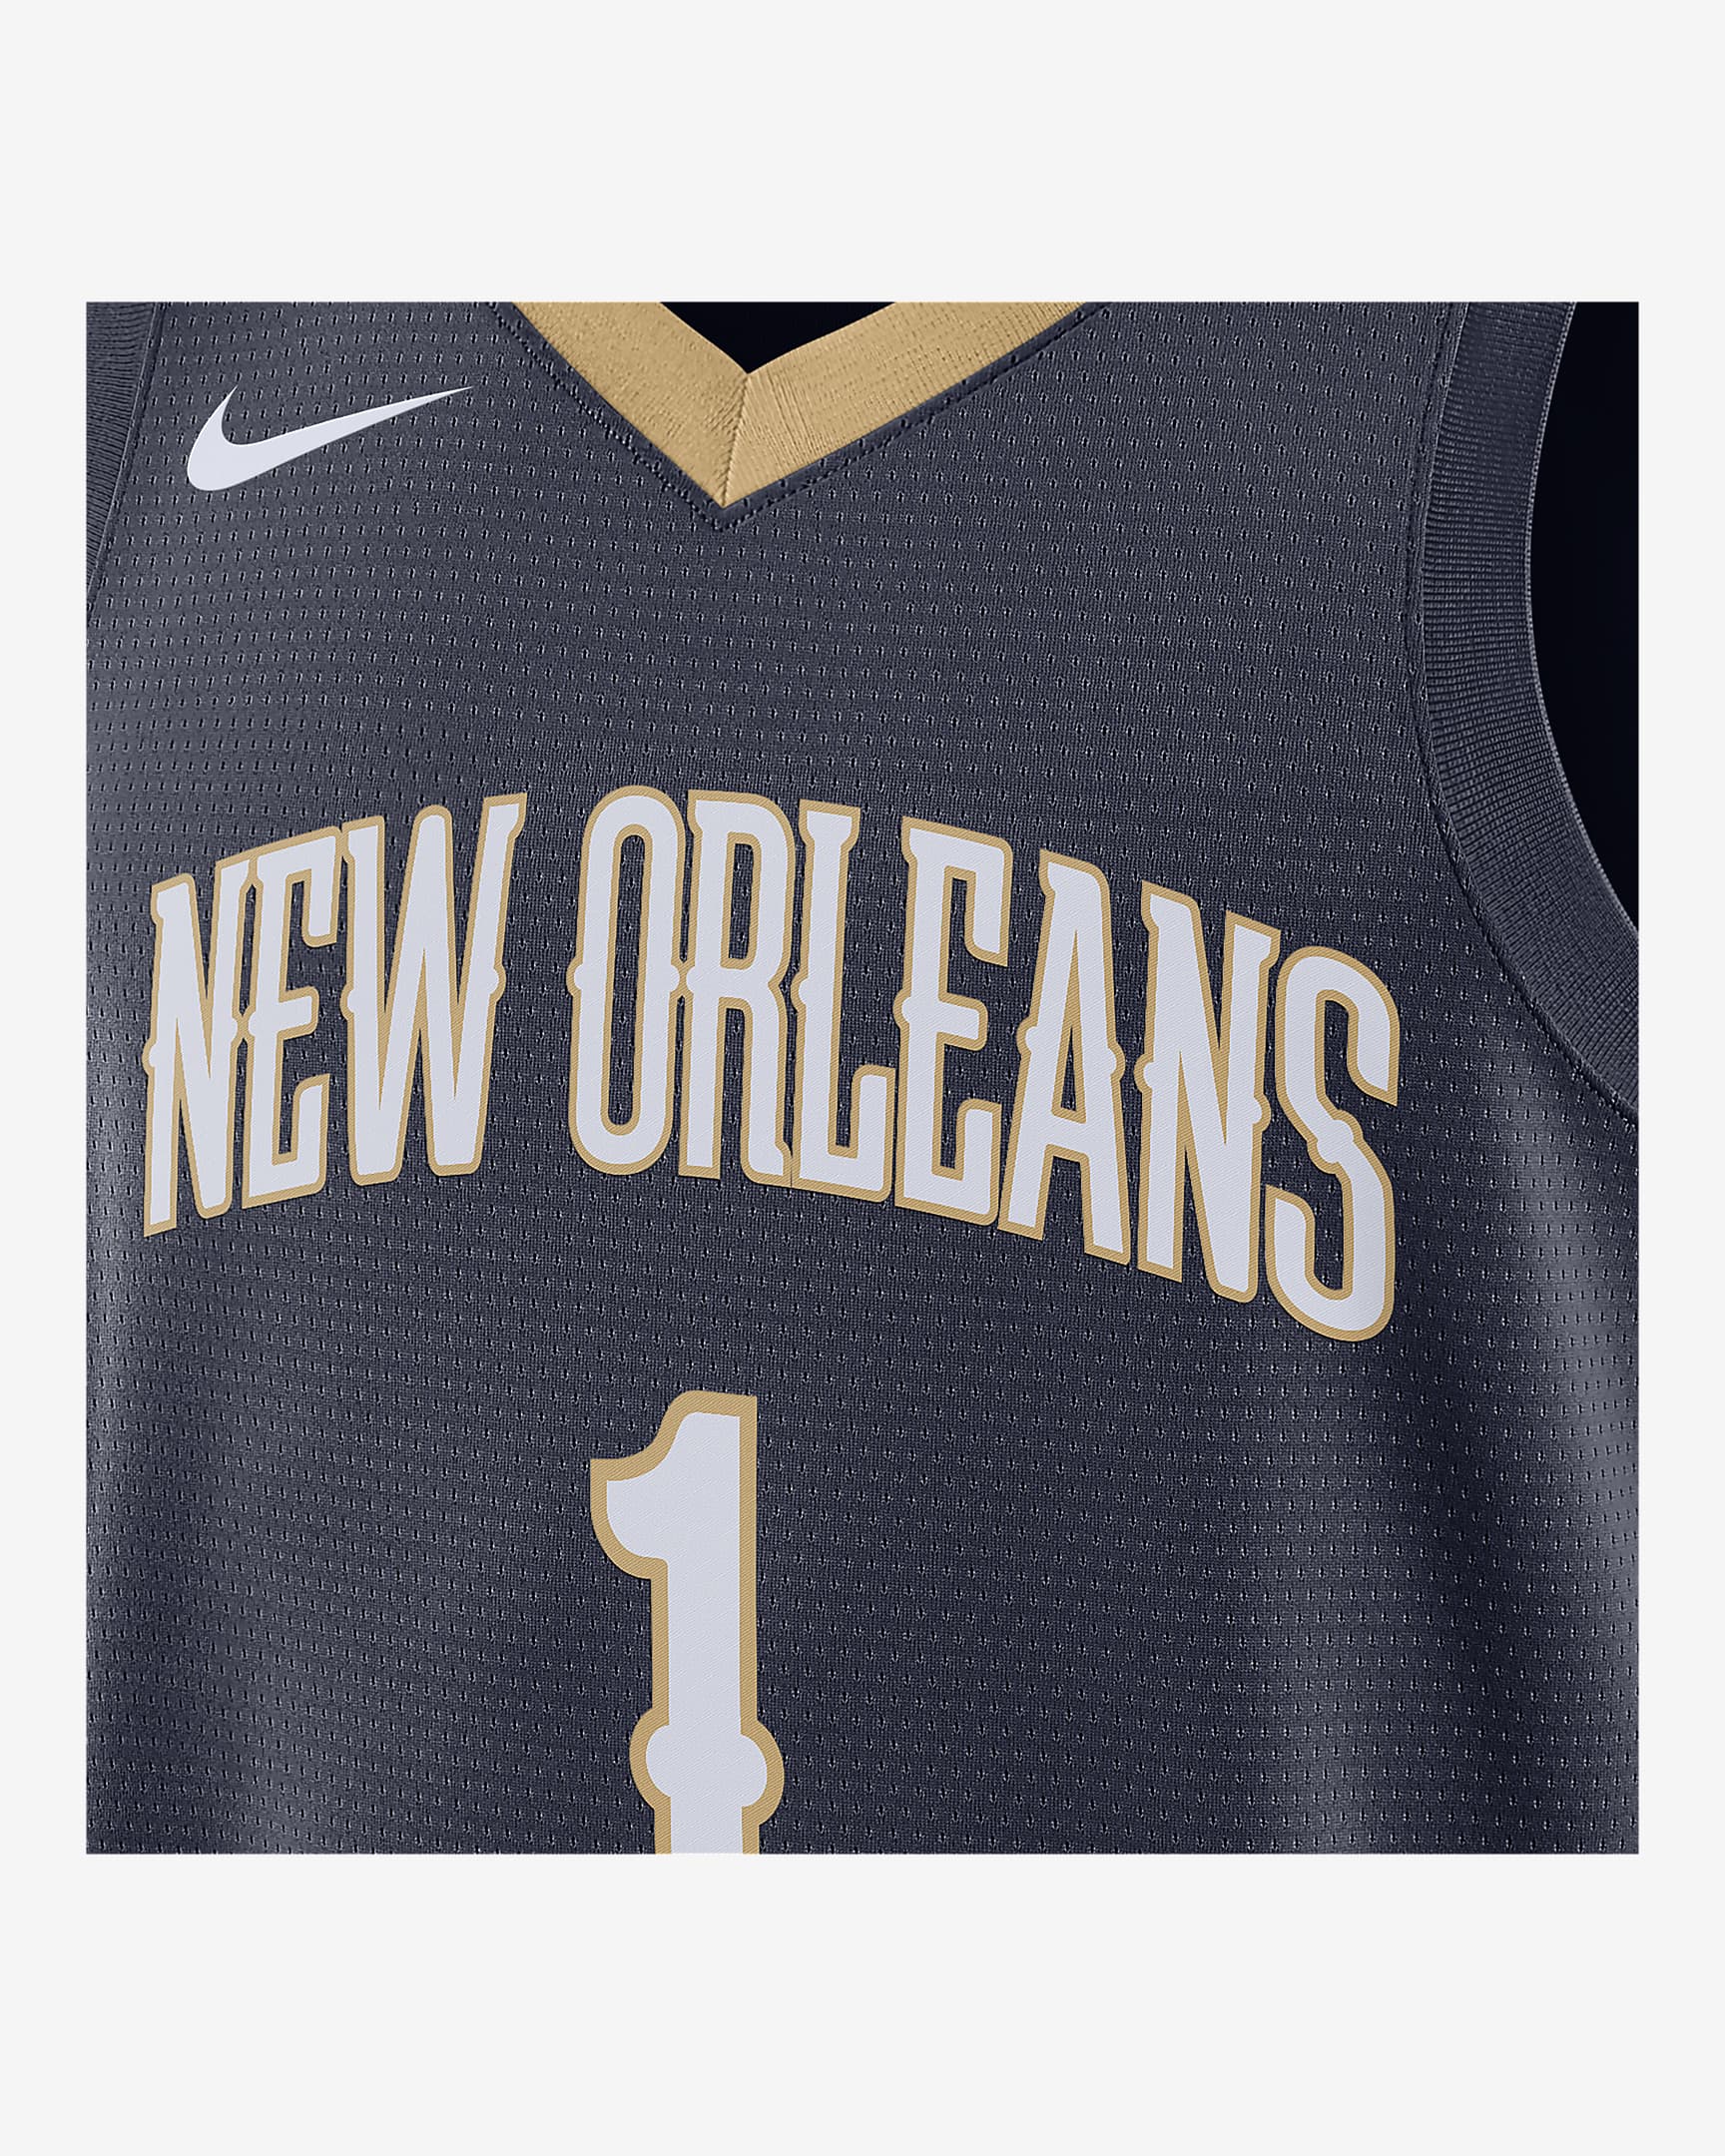 New Orleans Pelicans Icon Edition 2022/23 Men's Nike Dri-FIT NBA ...